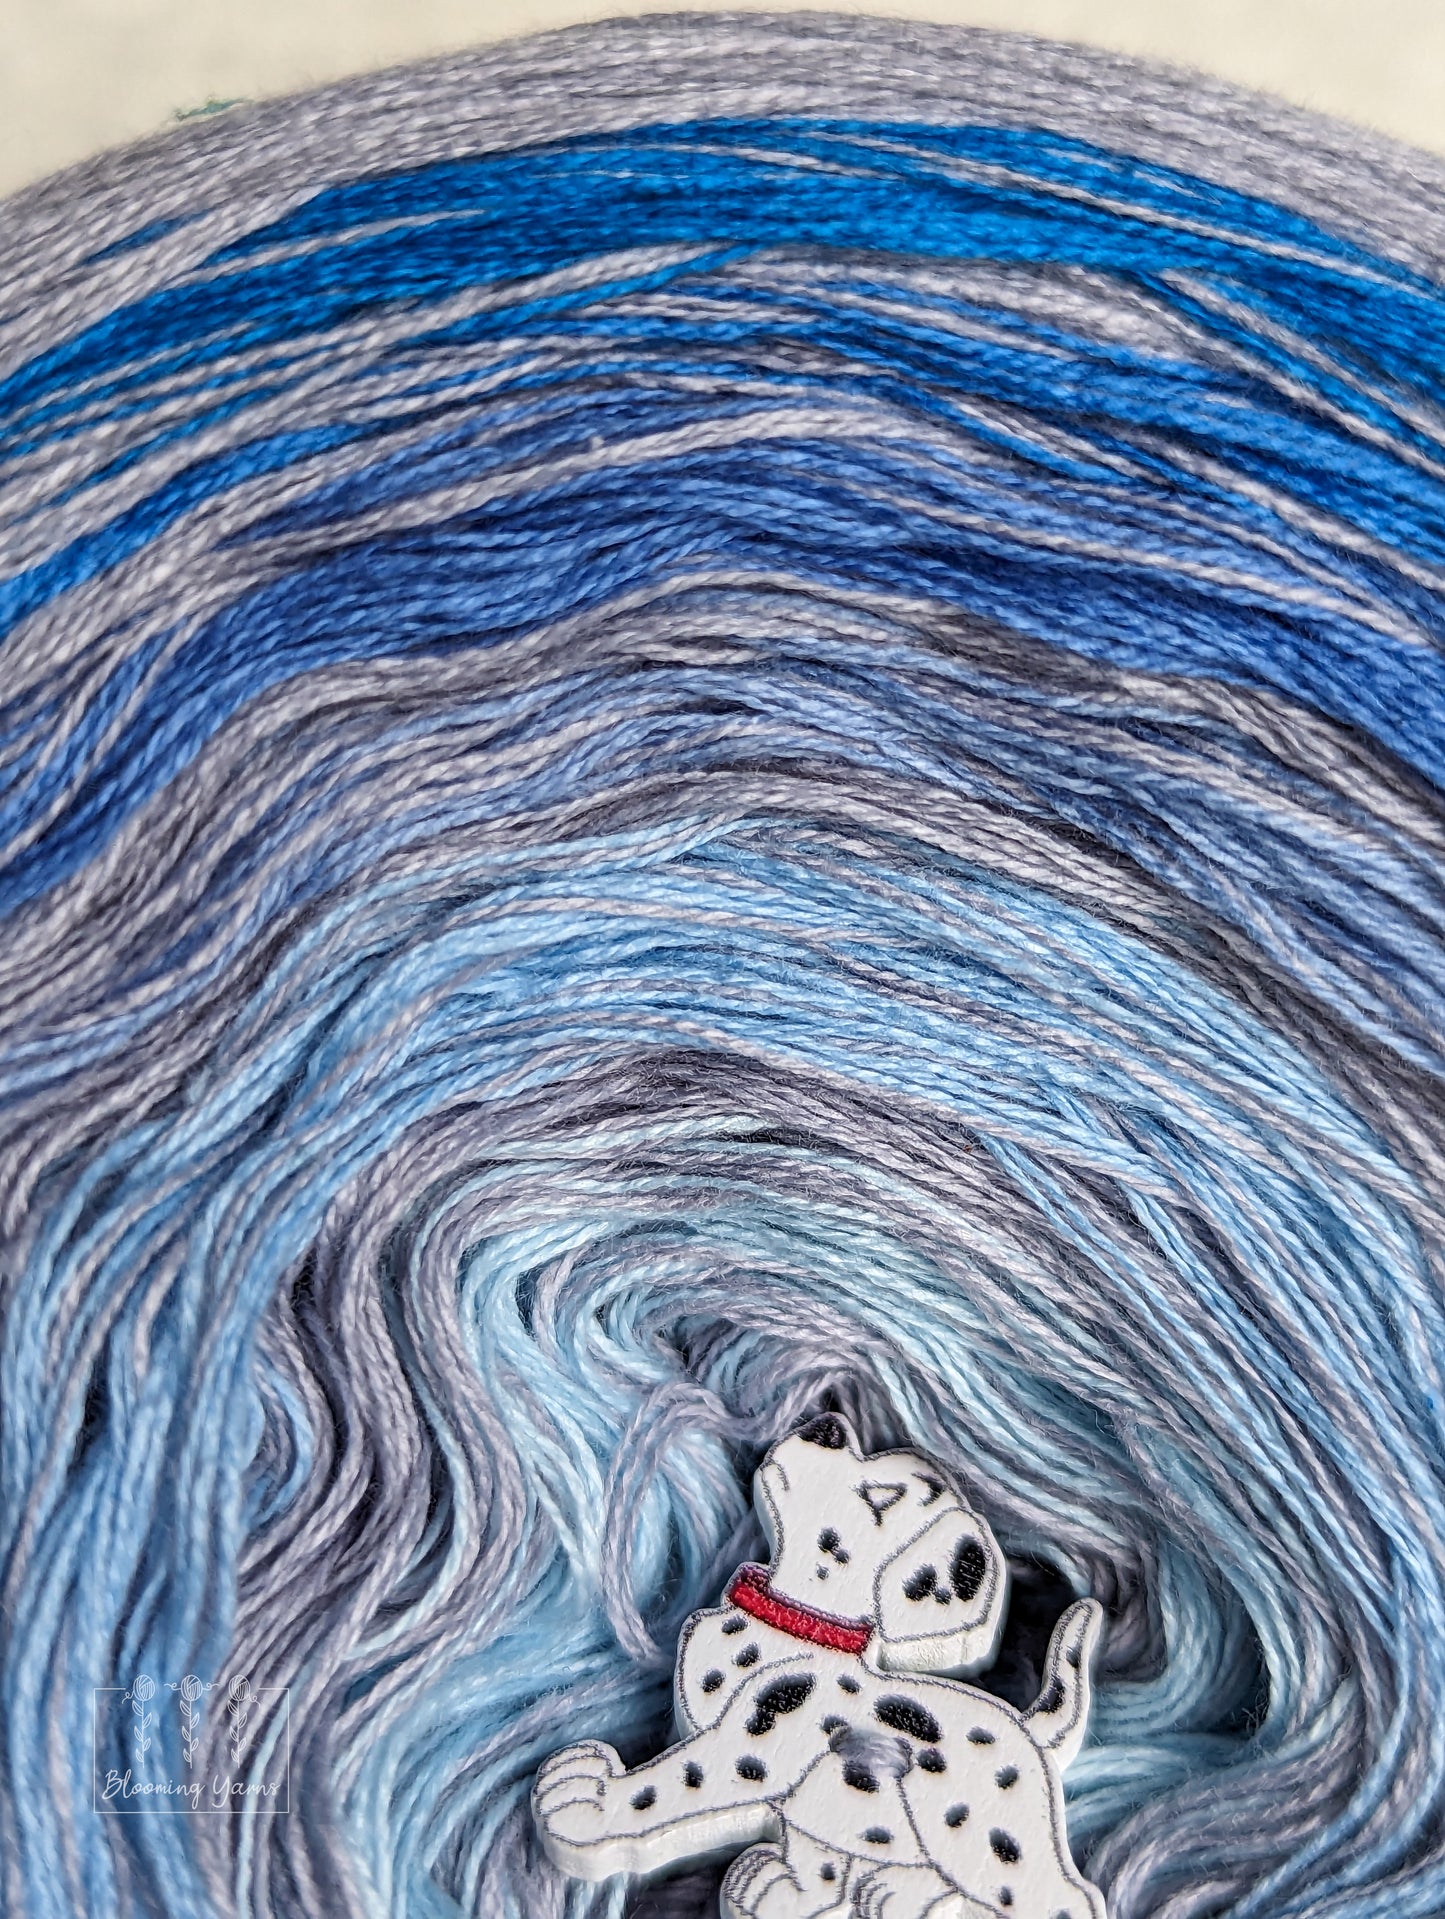 "Sea waves" cotton/acrylic ombre yarn cake